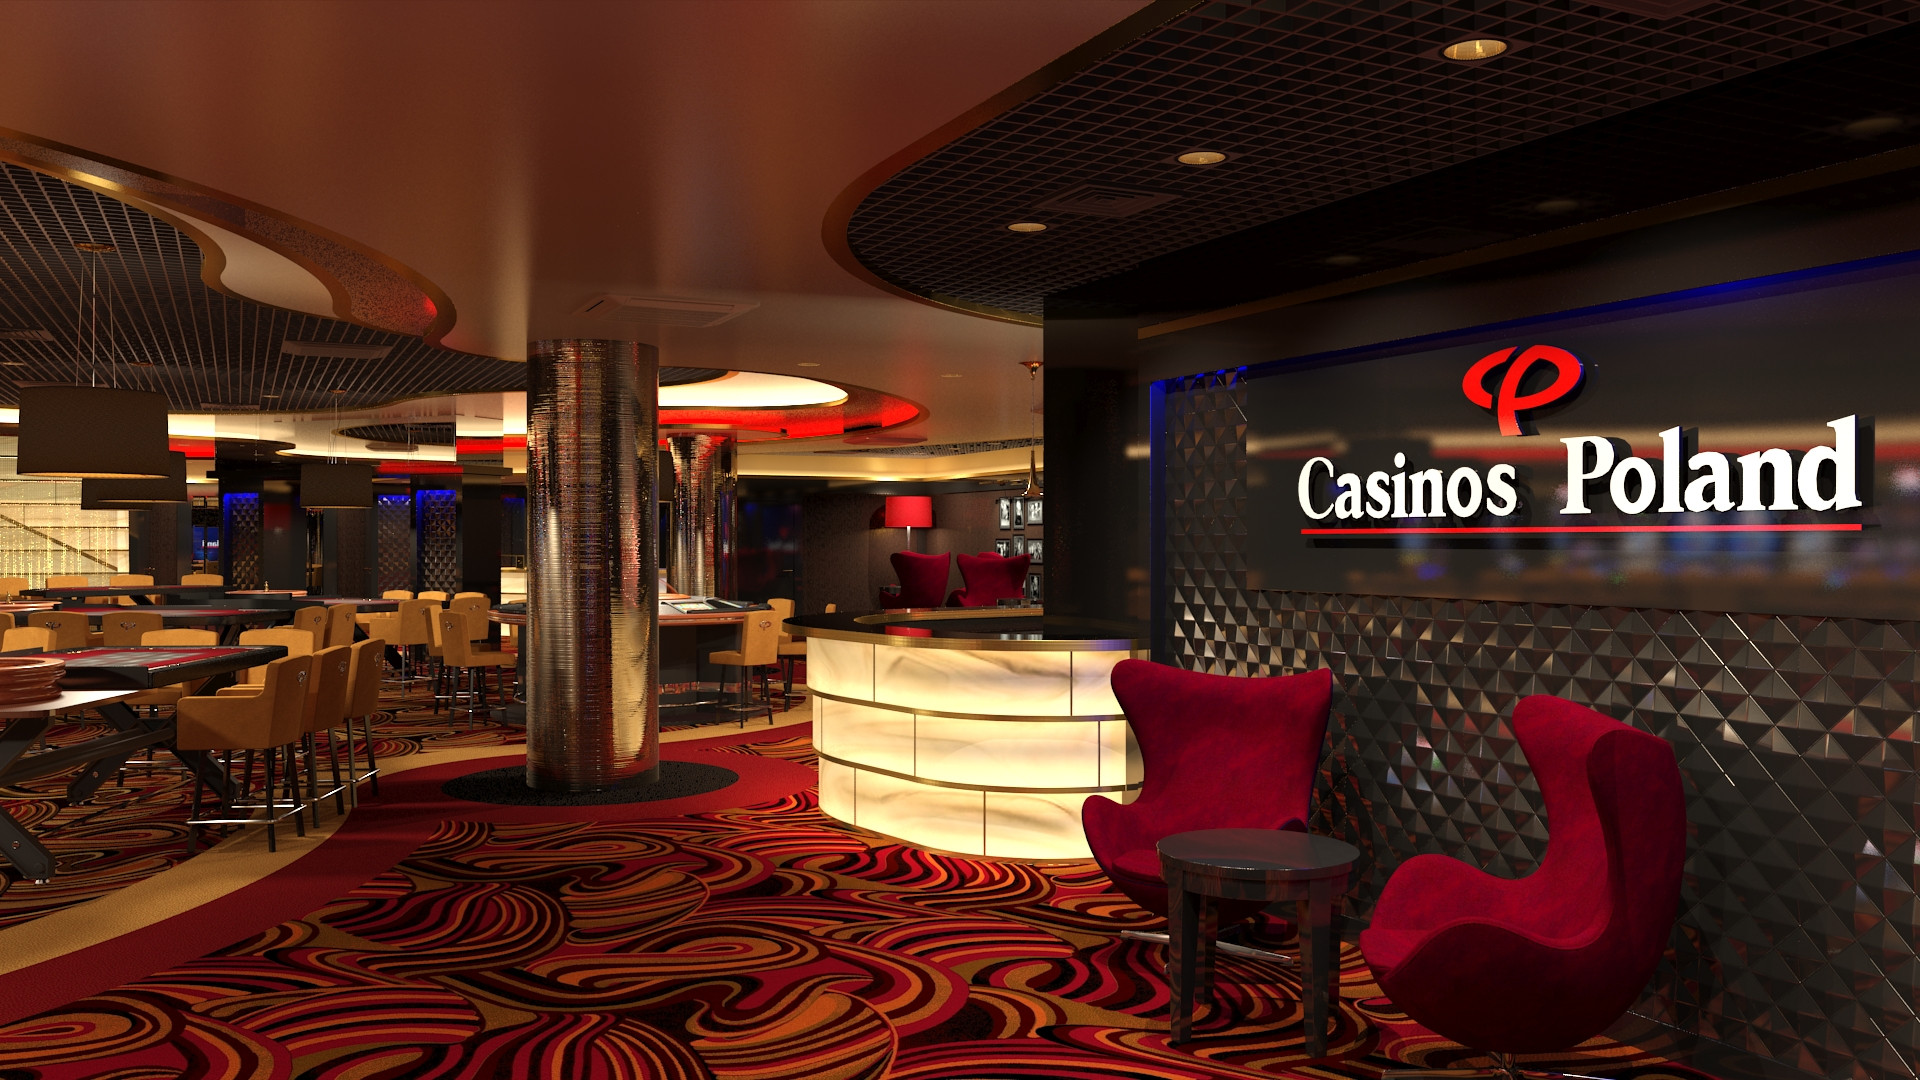 A Good online casino Is...